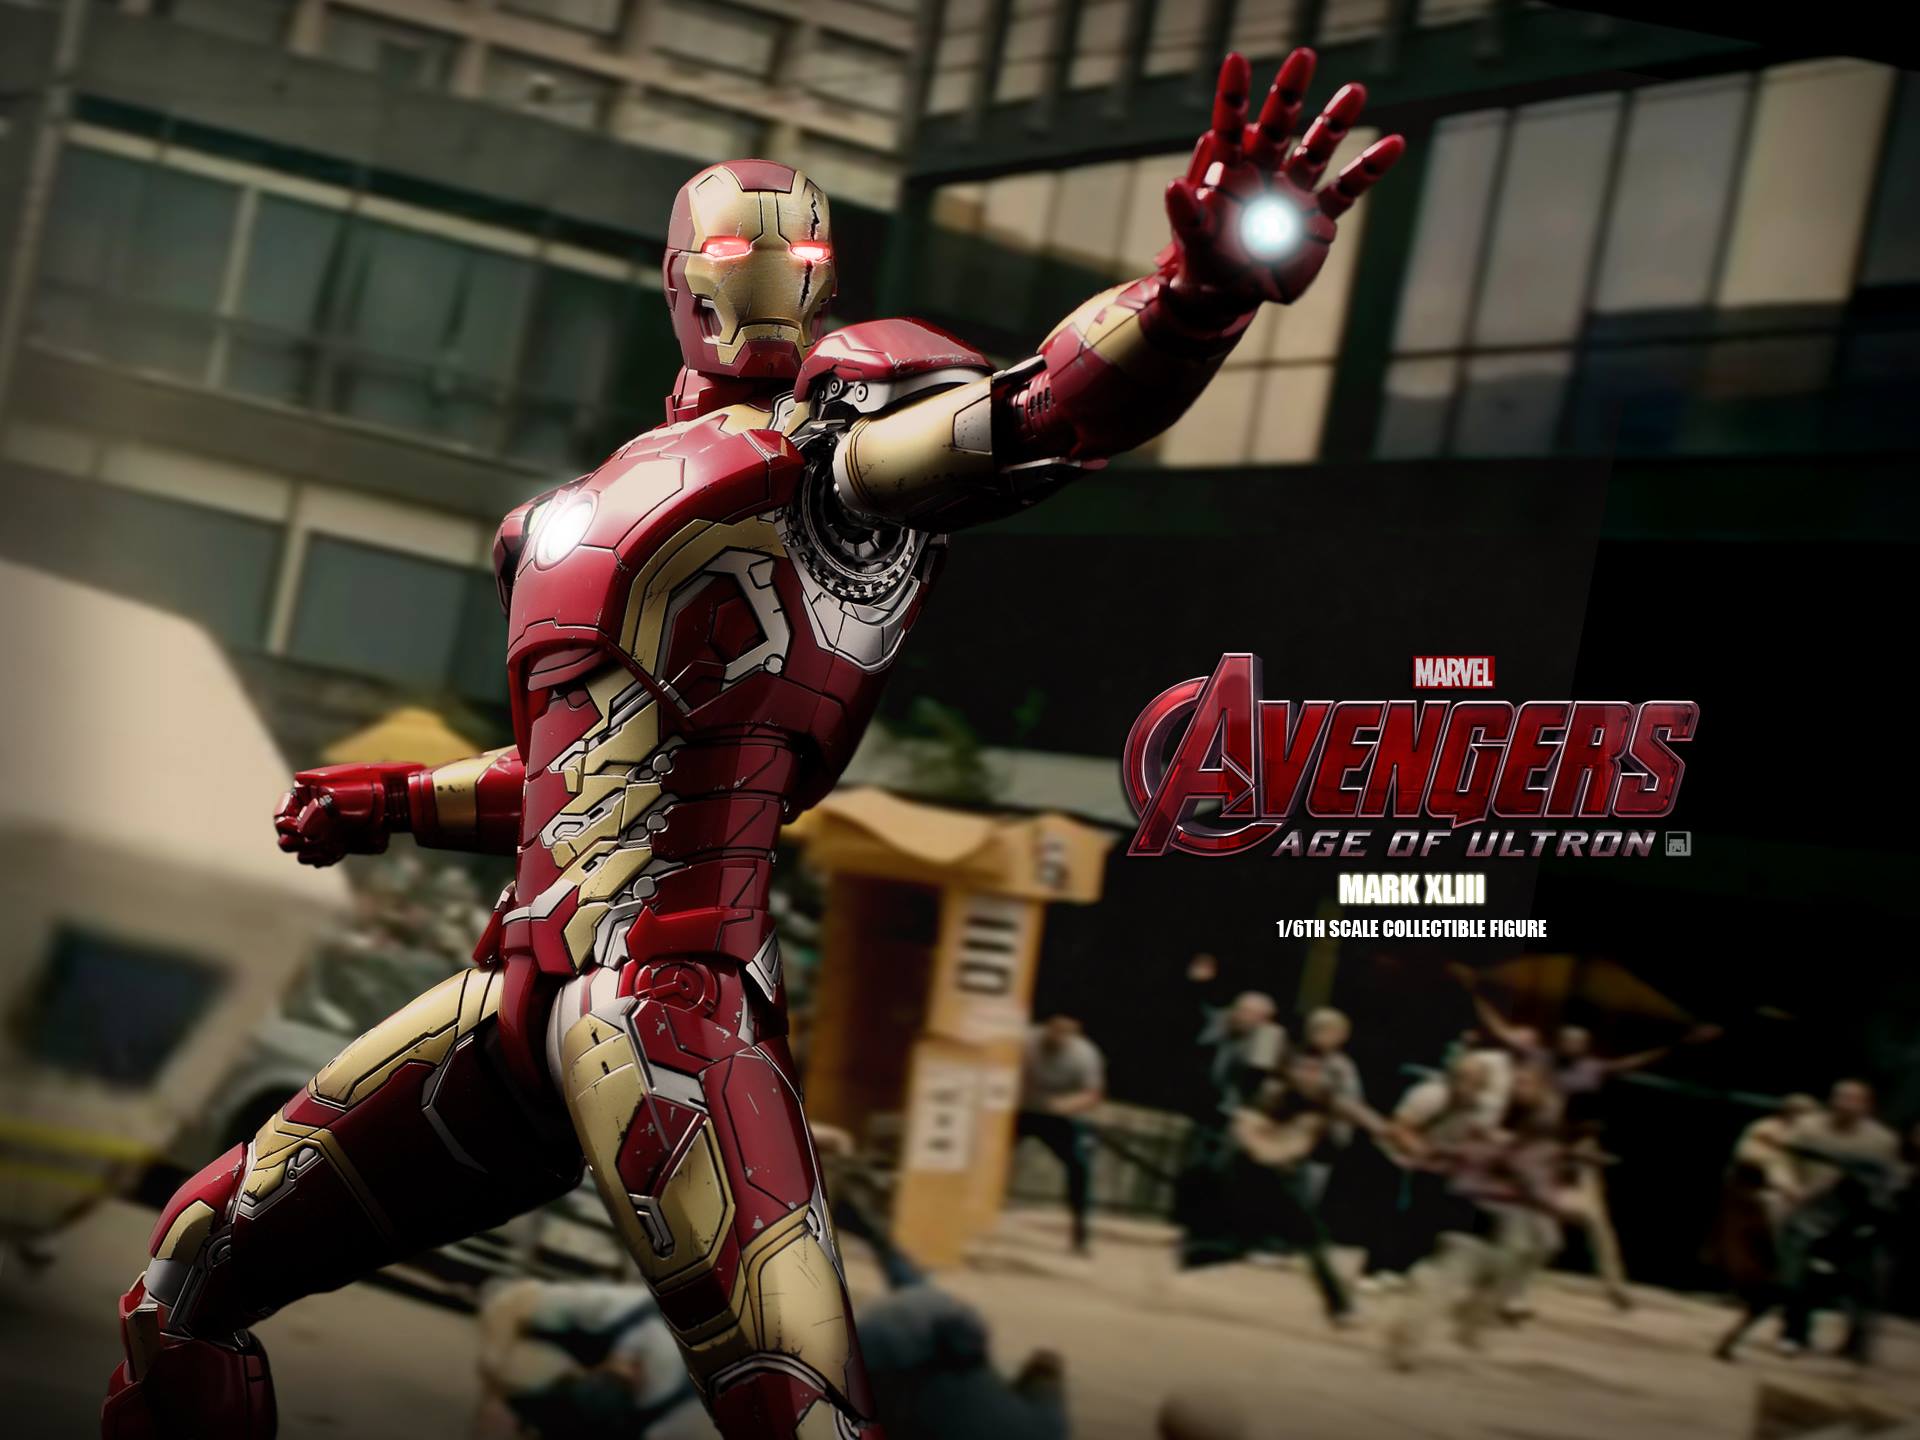 Hot Toys Reveals Avengers: Age of Ultron's Iron Man Mark XLIII